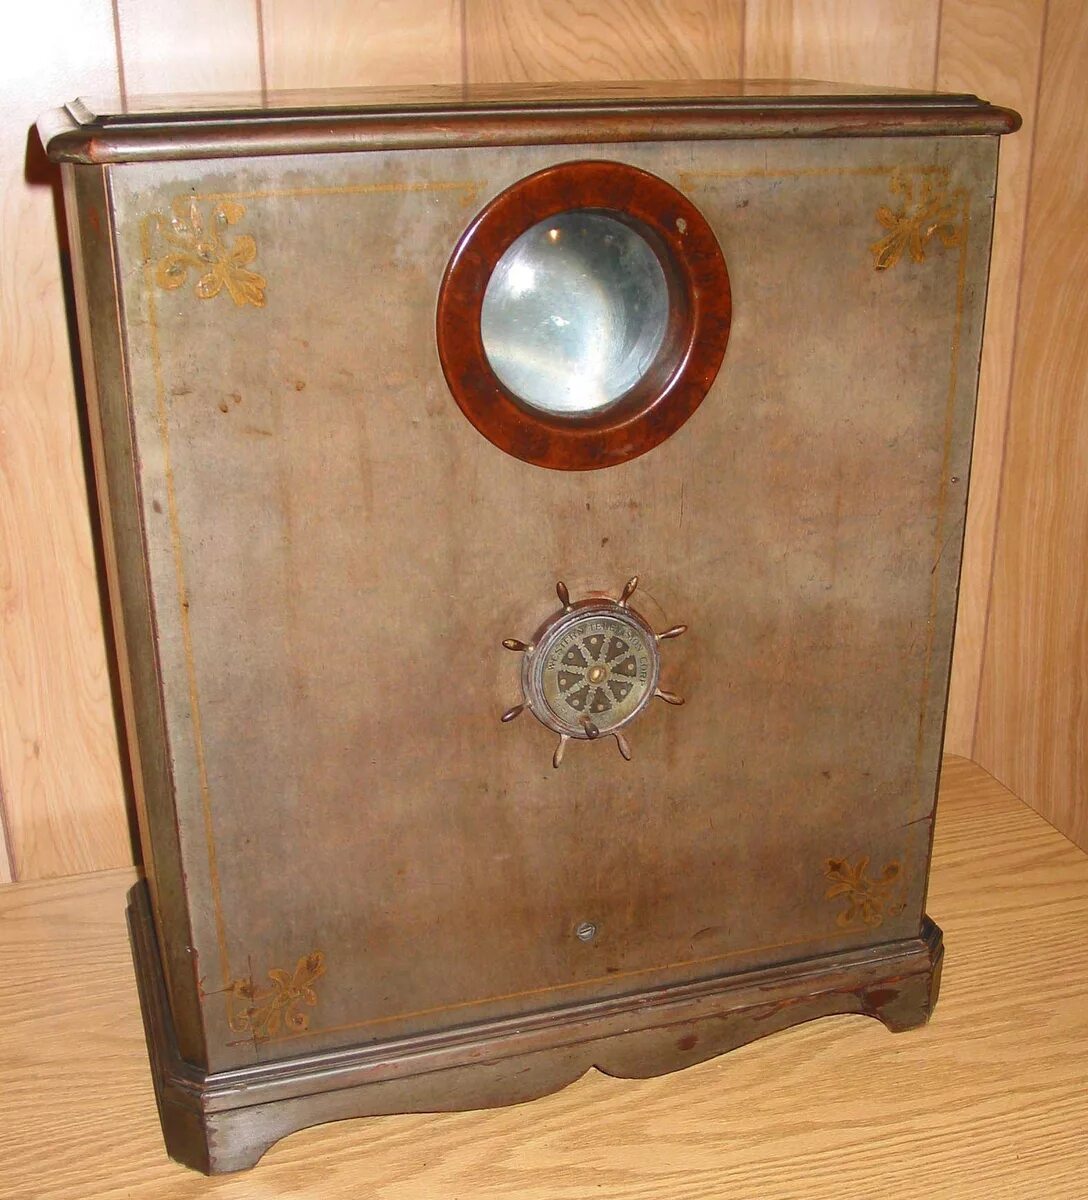 Octagon телевизор 1928. Телевизор 1929 года. 1929 Год телевизор Вижнетт. Телевизор 1933 года.